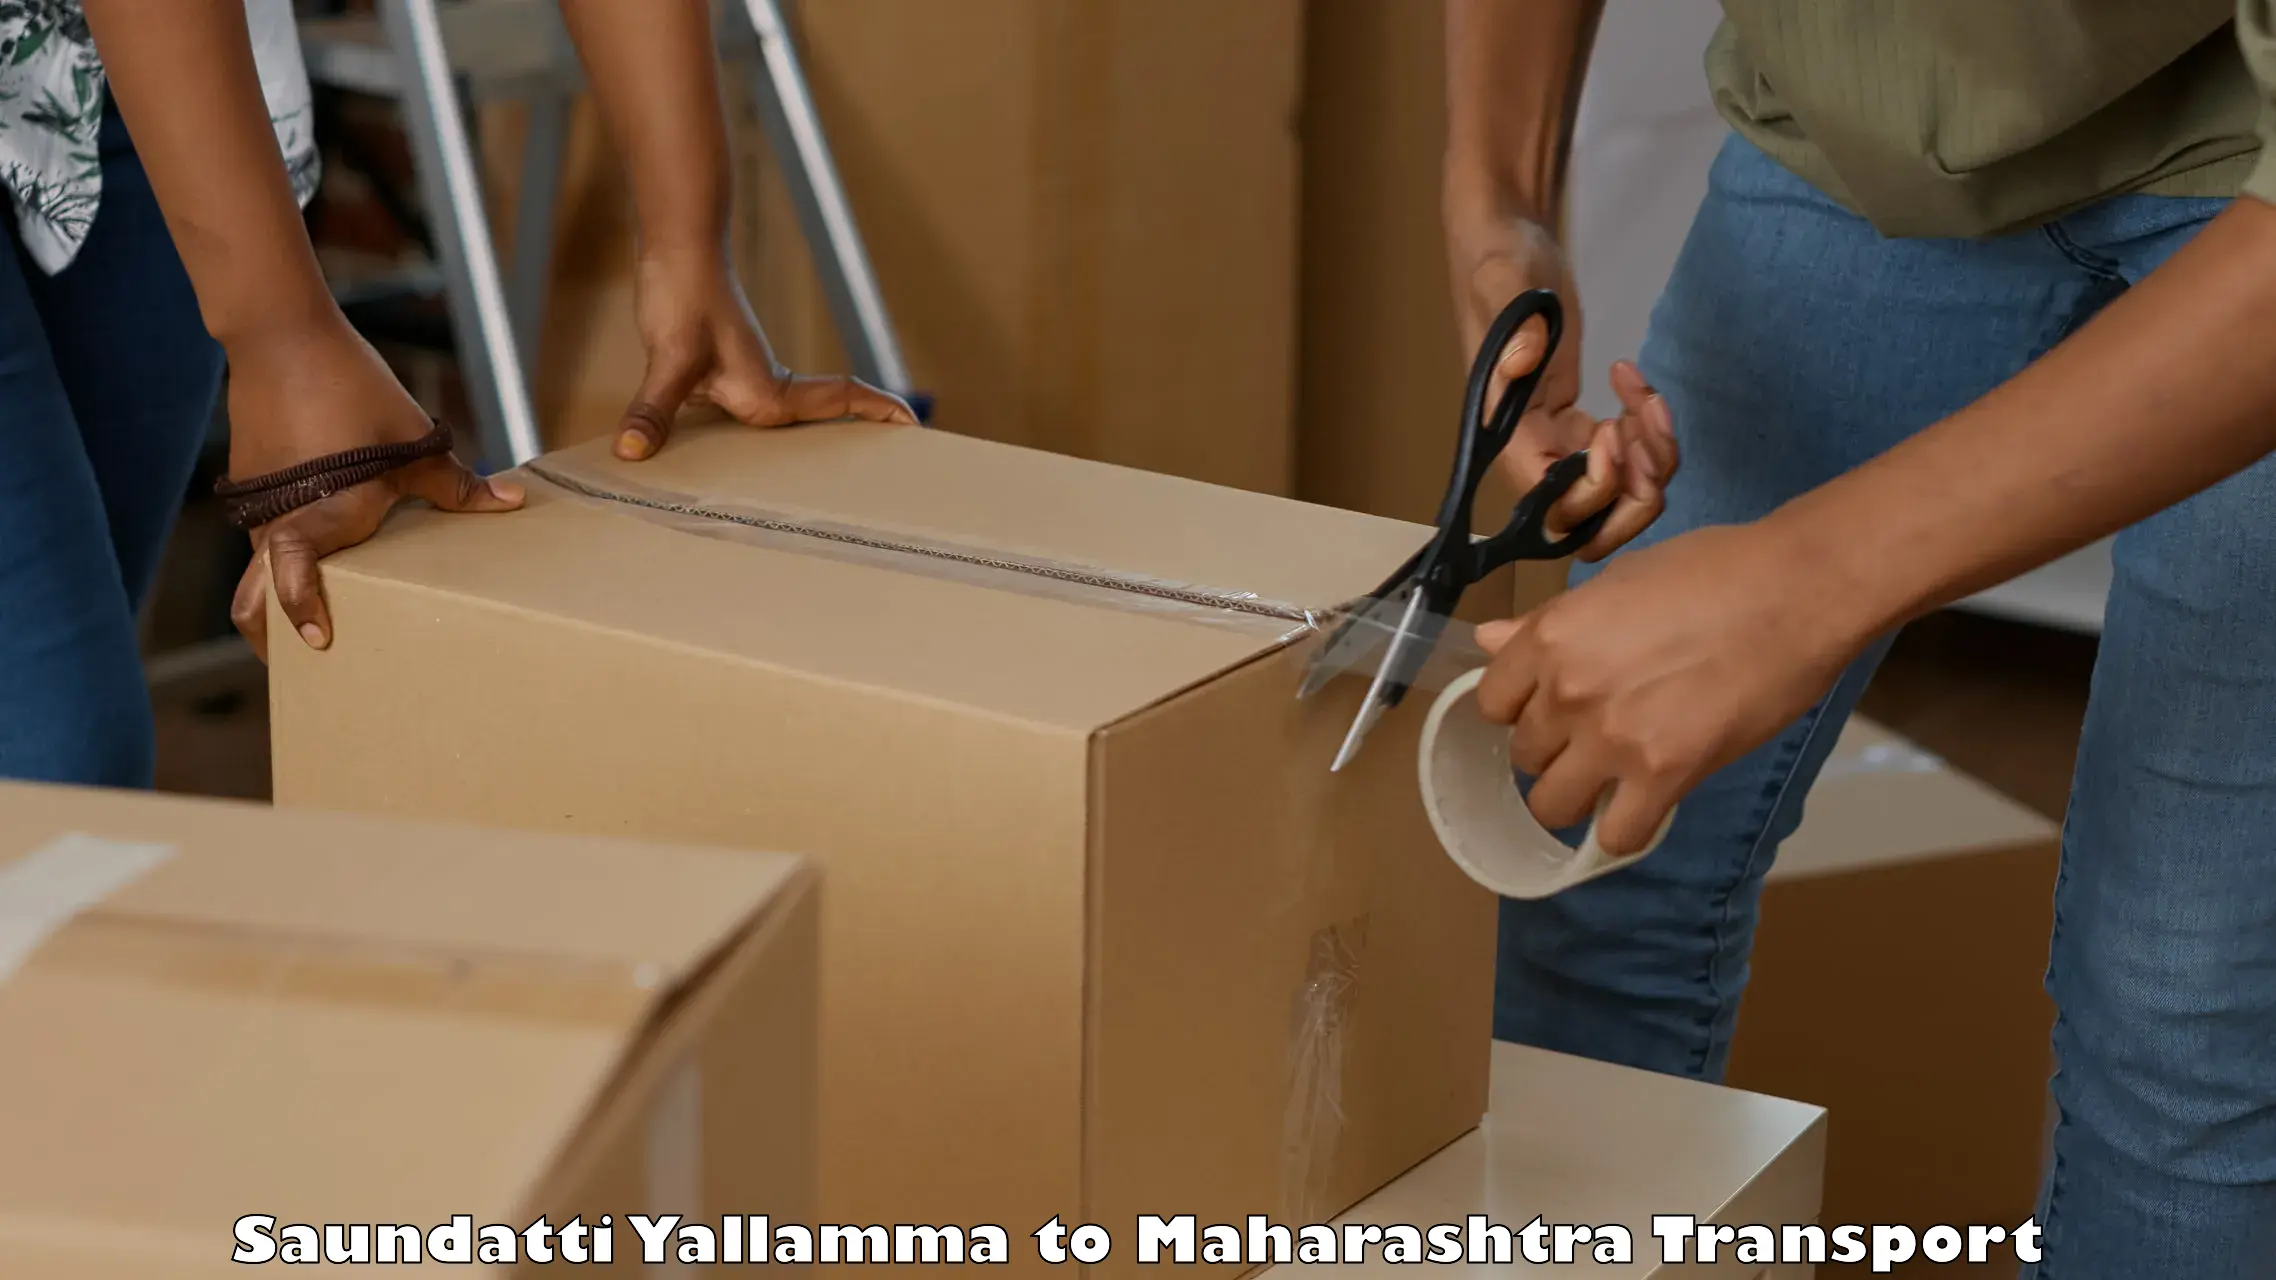 Furniture transport service Saundatti Yallamma to Roha